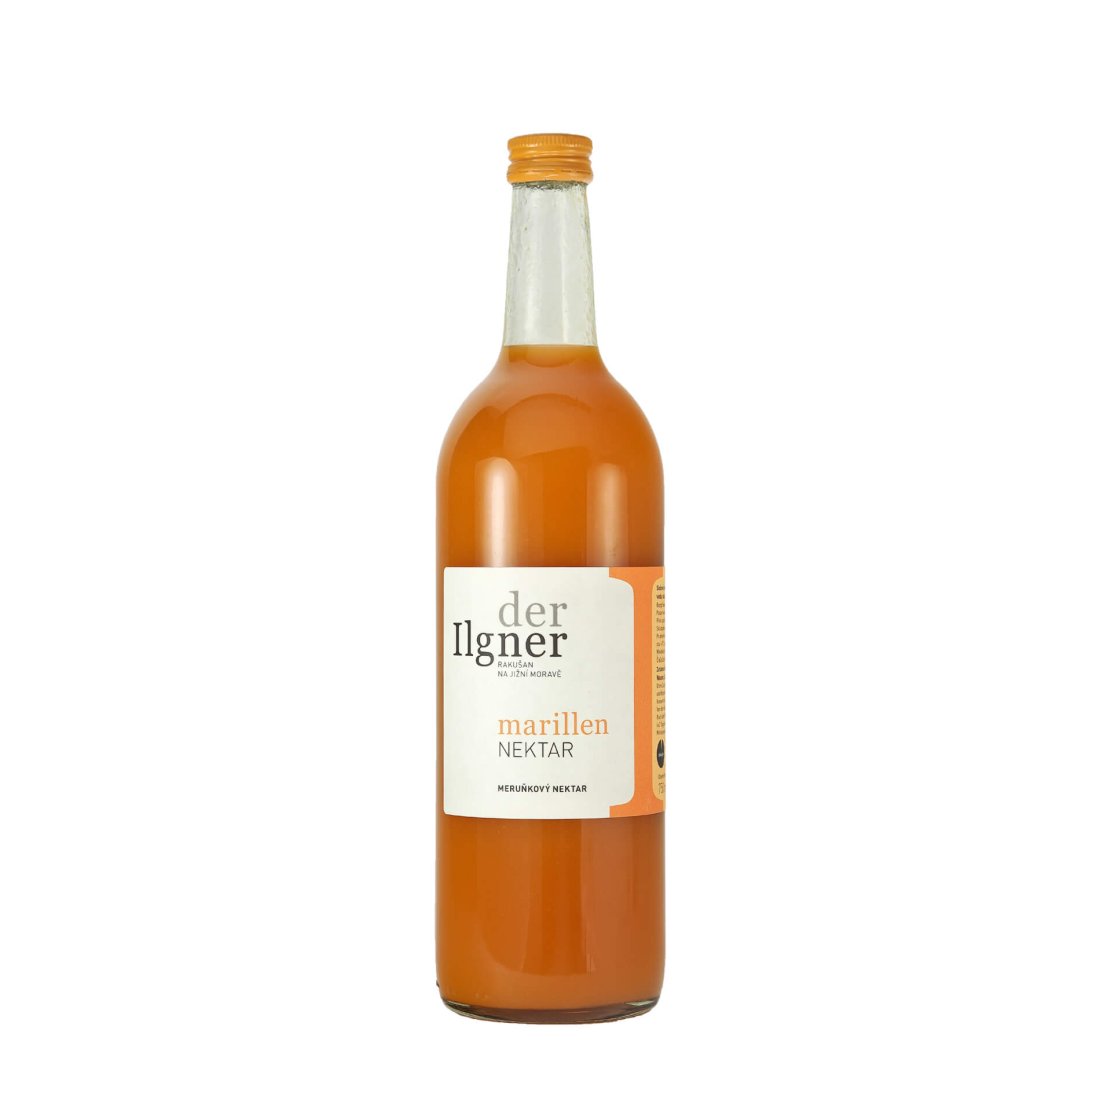 Meruňkový nektar "Der Ilgner" ŠPALEK 0,75 L